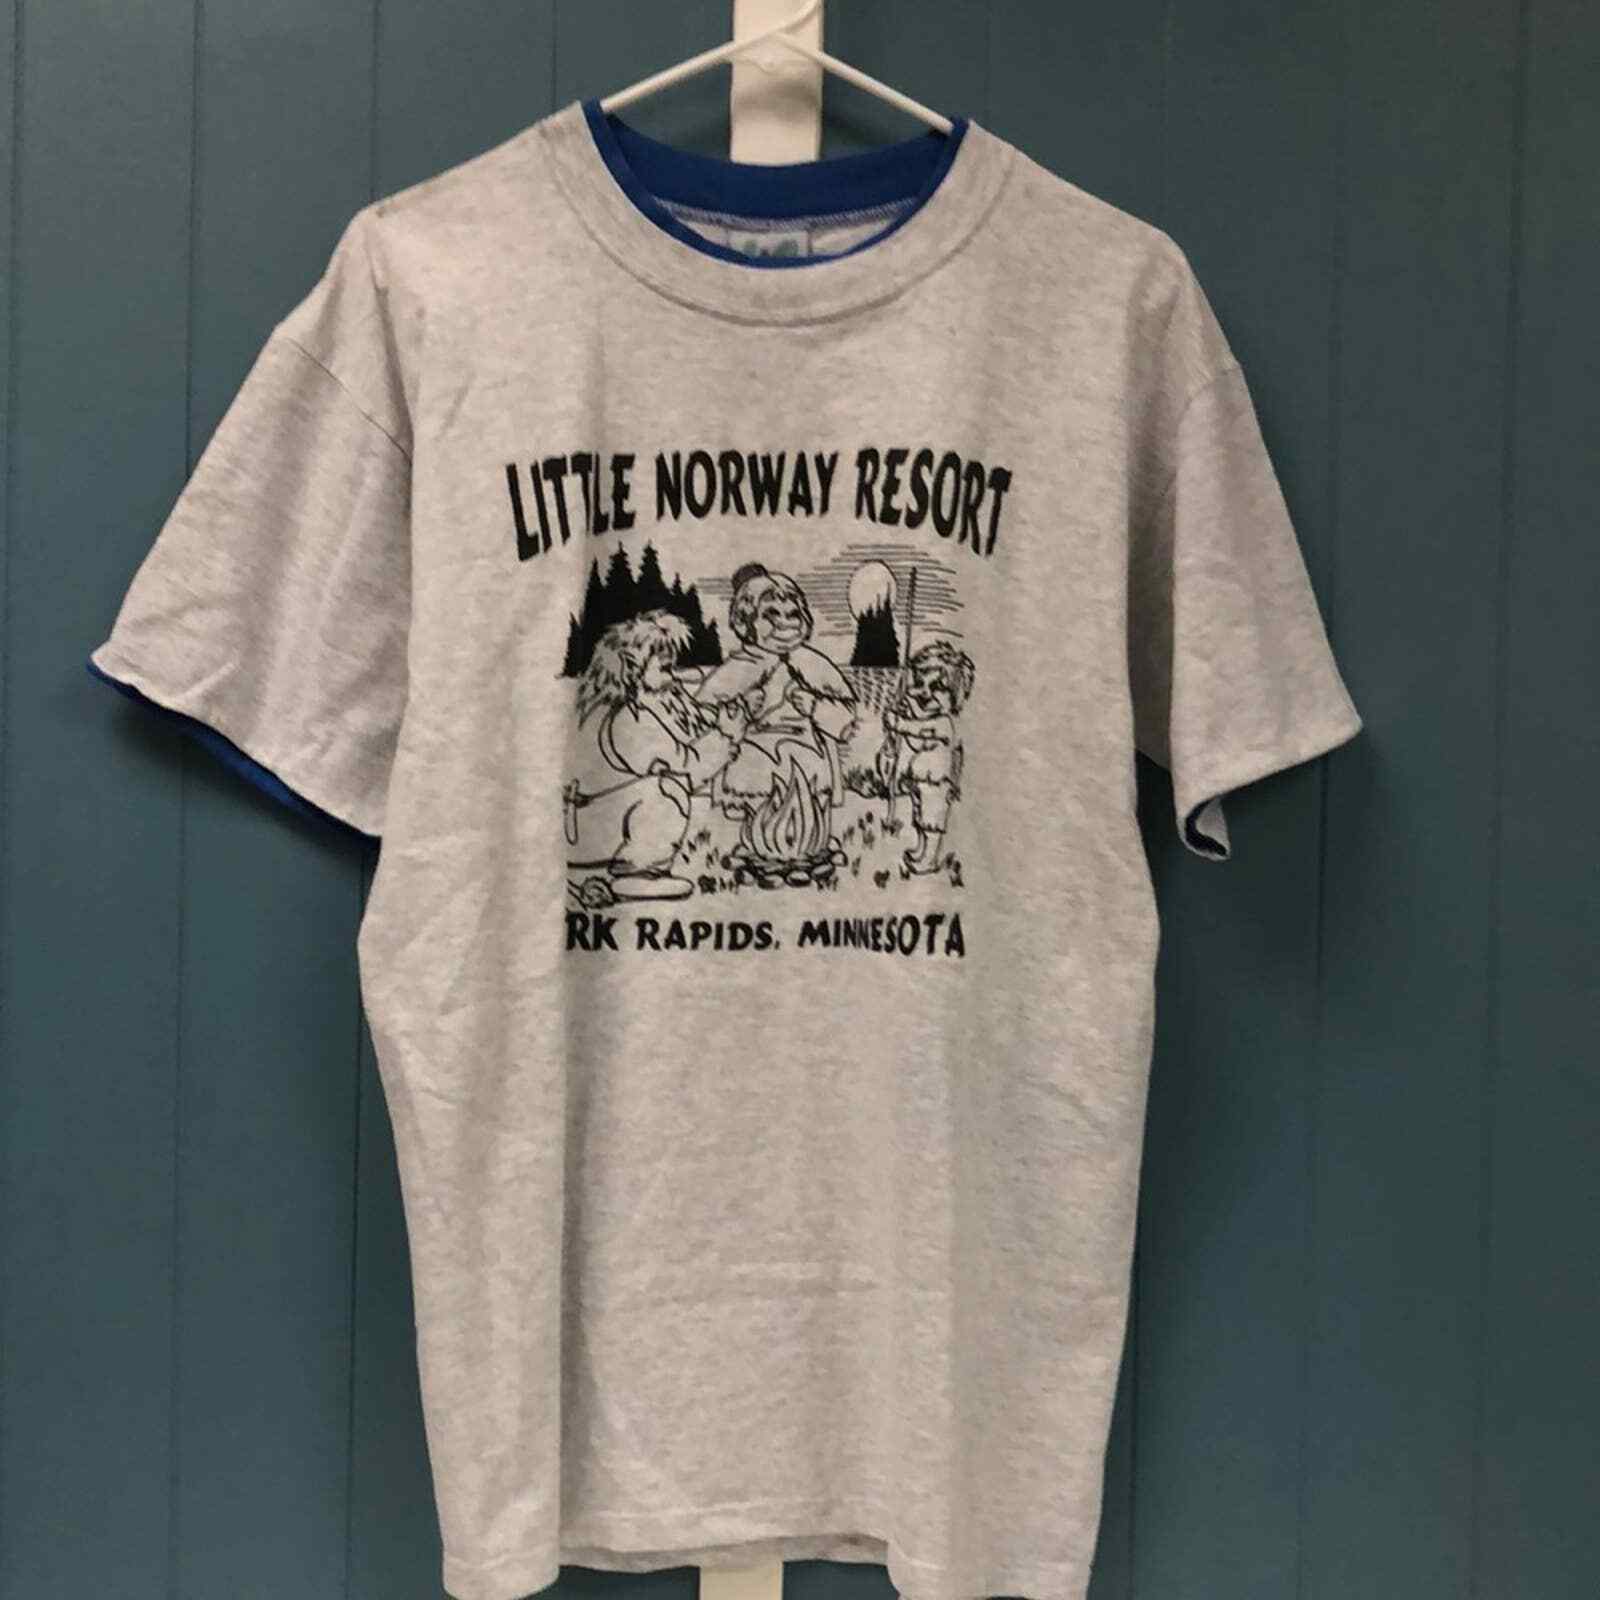 Primary image for Vintage LA Loving Little Norway Resort Park Rapids MN Minnesota graphic Tshirt L